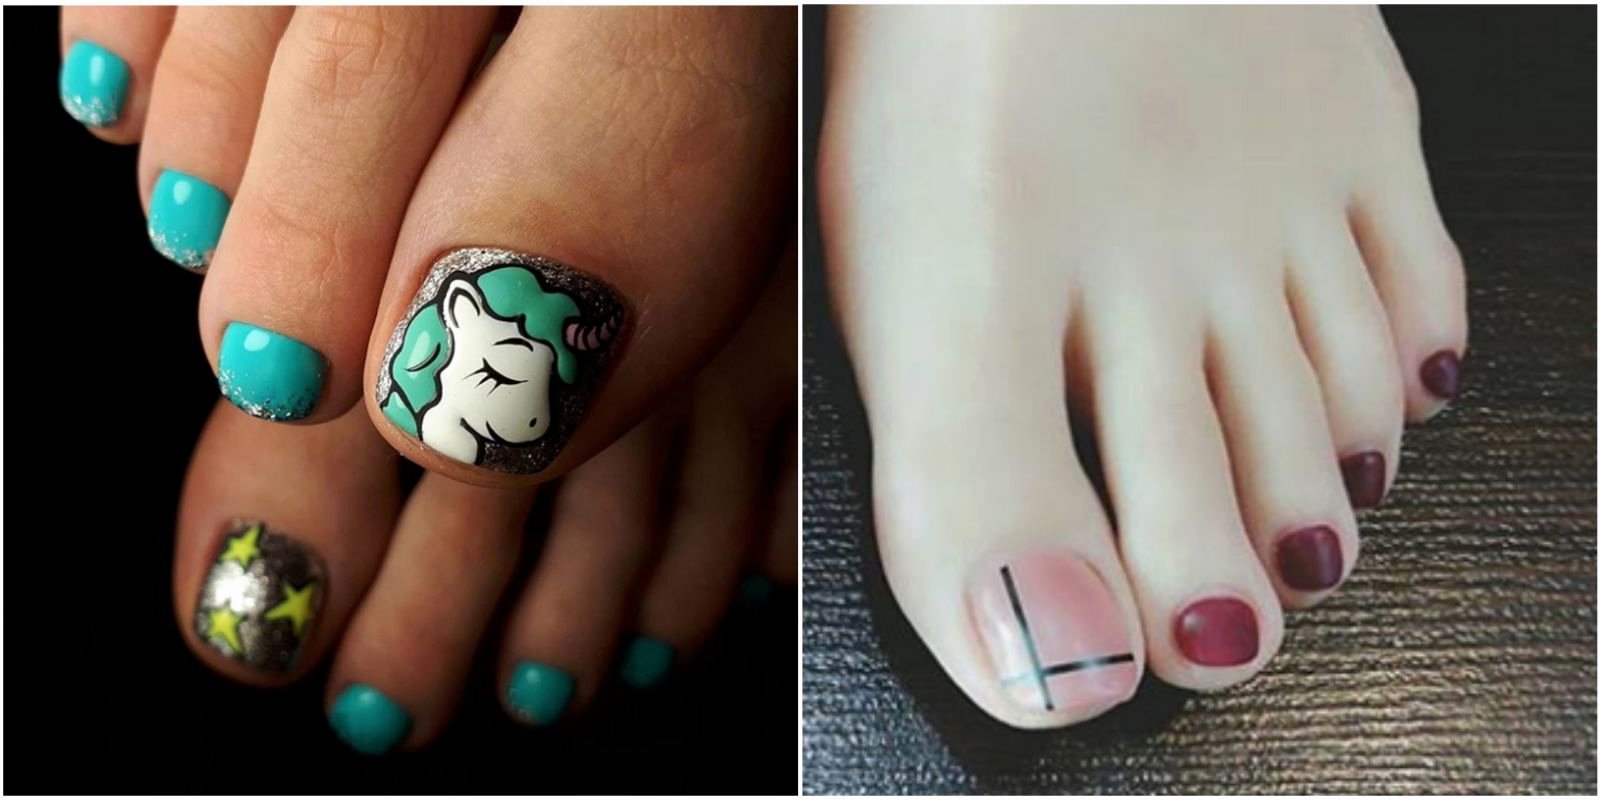 Toe Nail Polish Designs Lovely 12 Cute toe Nail Art Designs 2018 Best toenail Polish Ideas